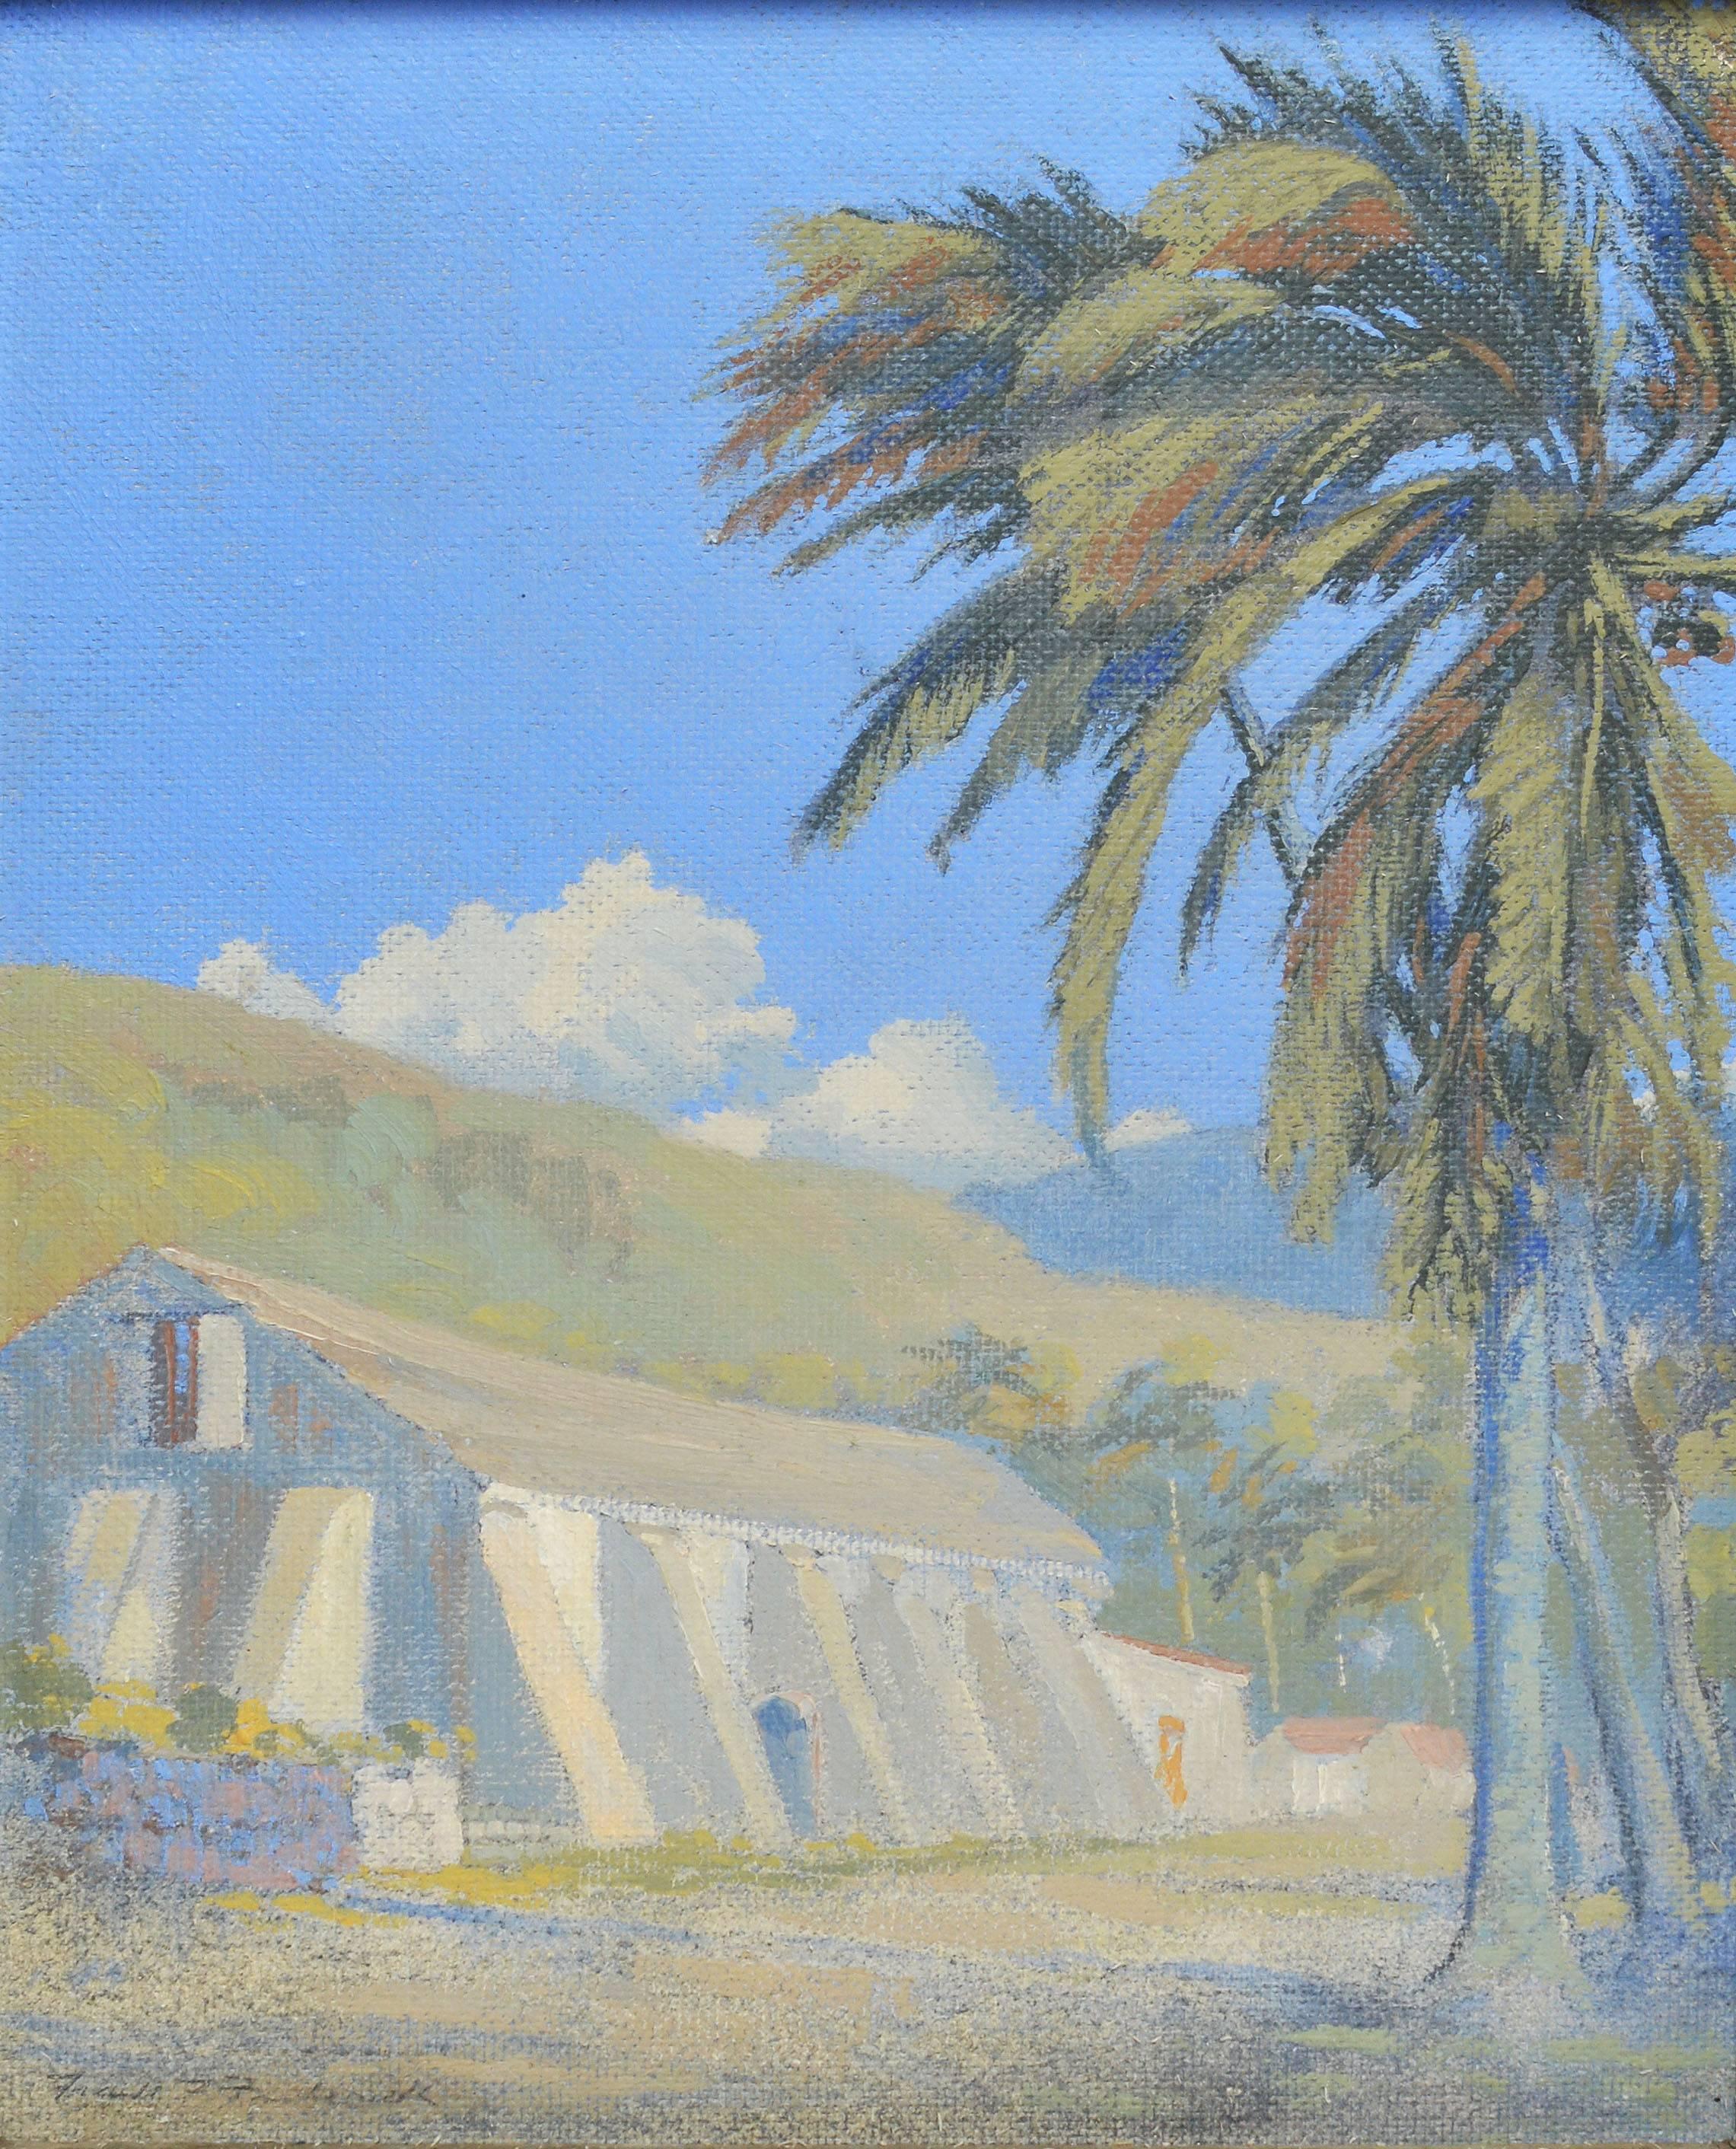 Sugar Warehouse, St Thomas Virgin Islands, by Frank Frederick 2